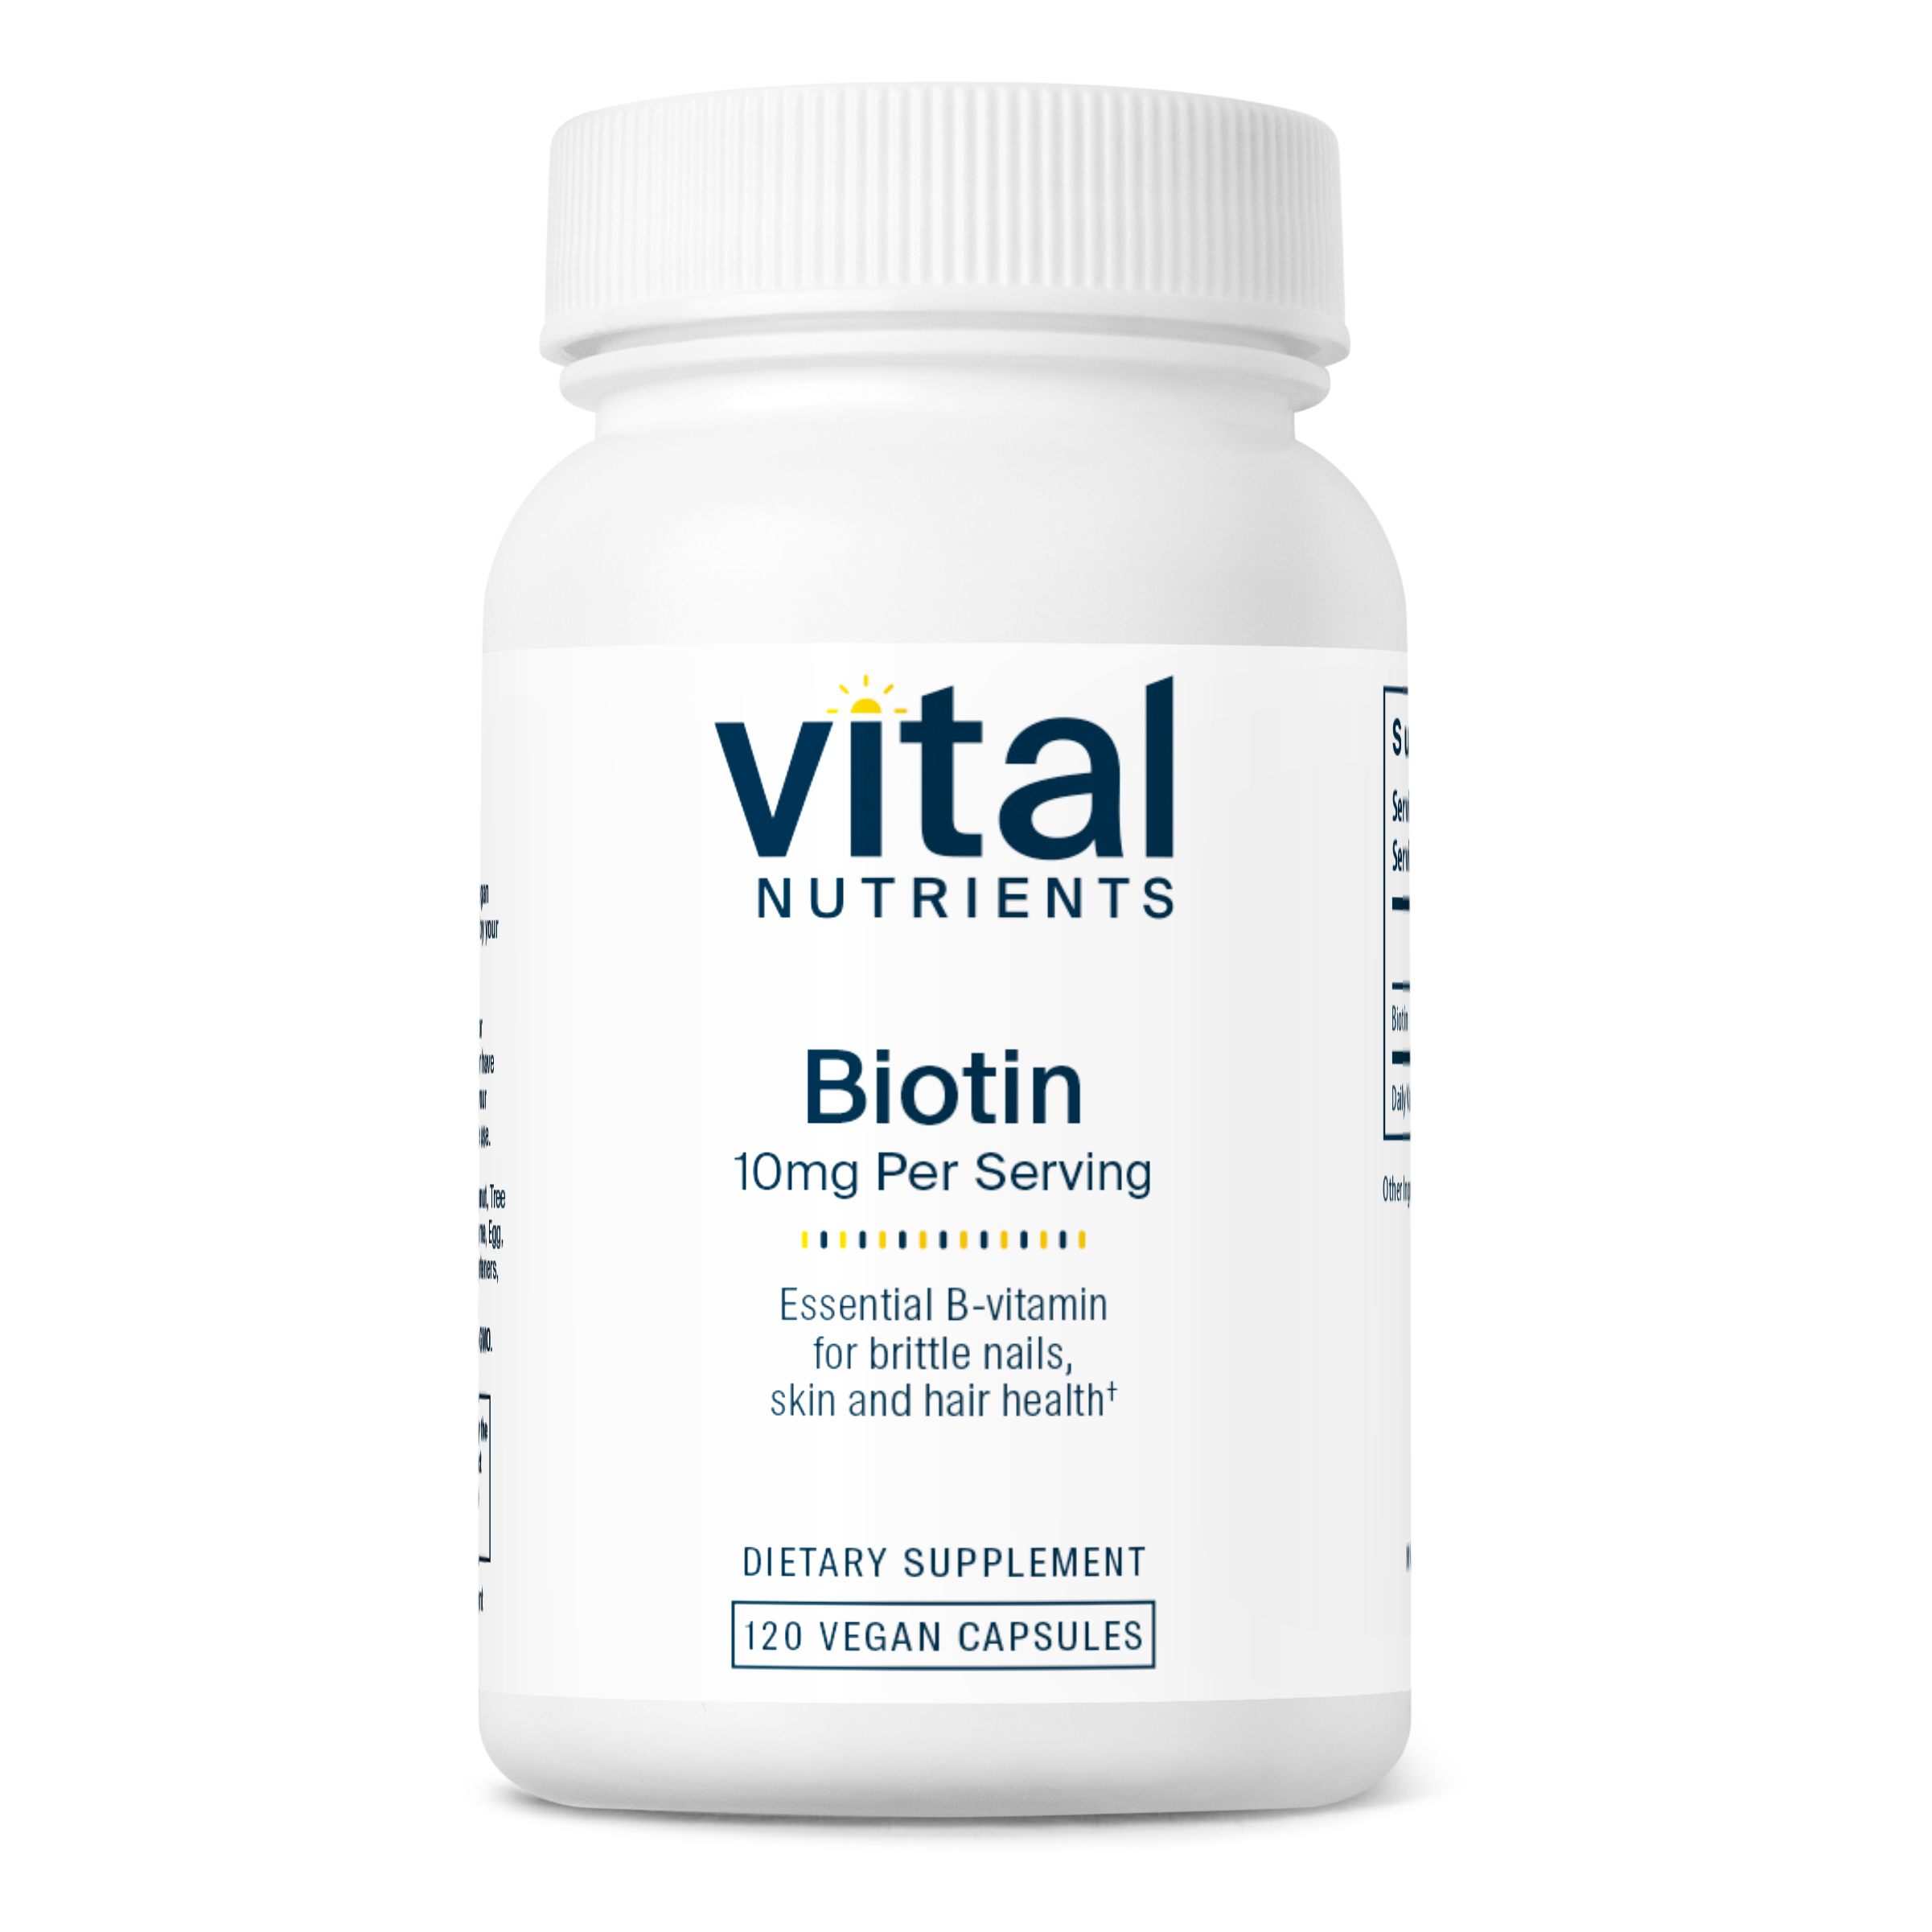 Vital Nutrients Biotin 10mg front of bottle.